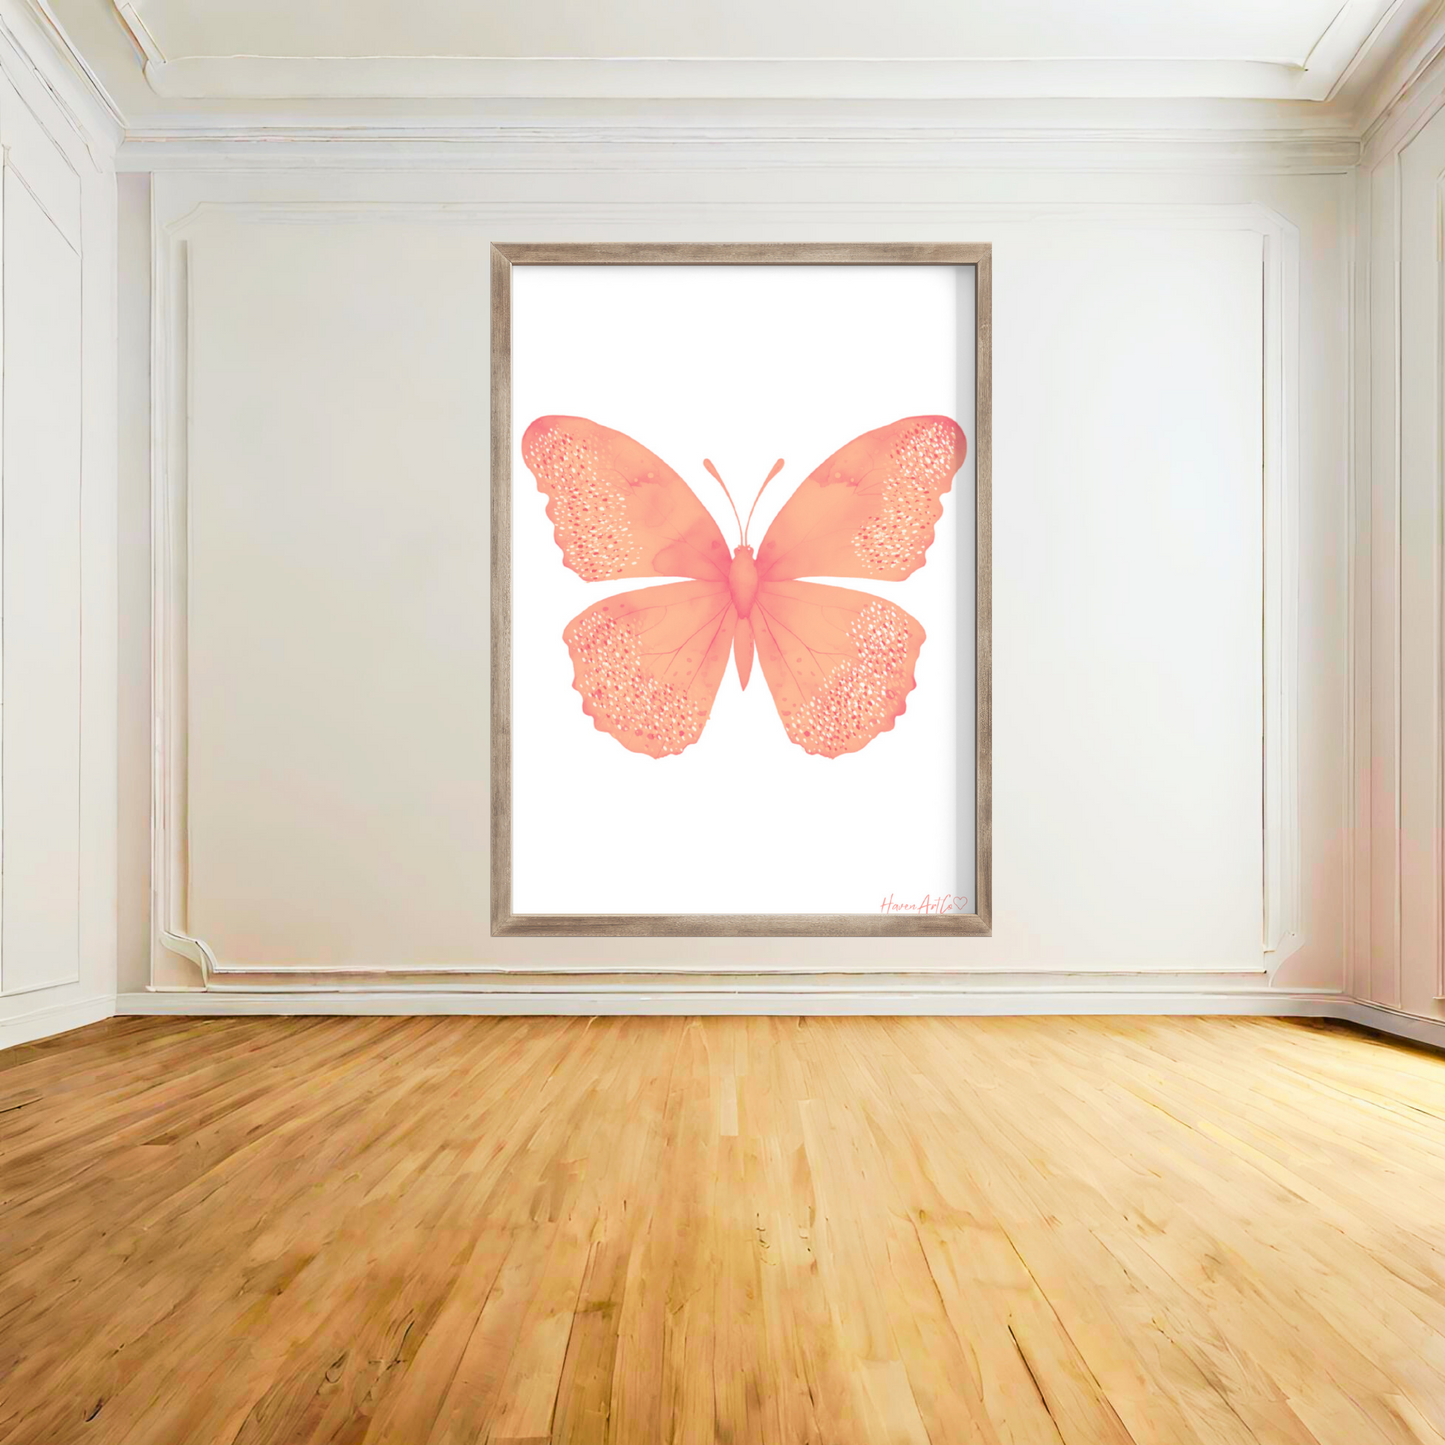 Peach and Pink Butterfly Wall Art Prints, Split Butterfly Digital Wall Art, Large Butterfly Maximalist Art, Butterfly & floral Artwork Print